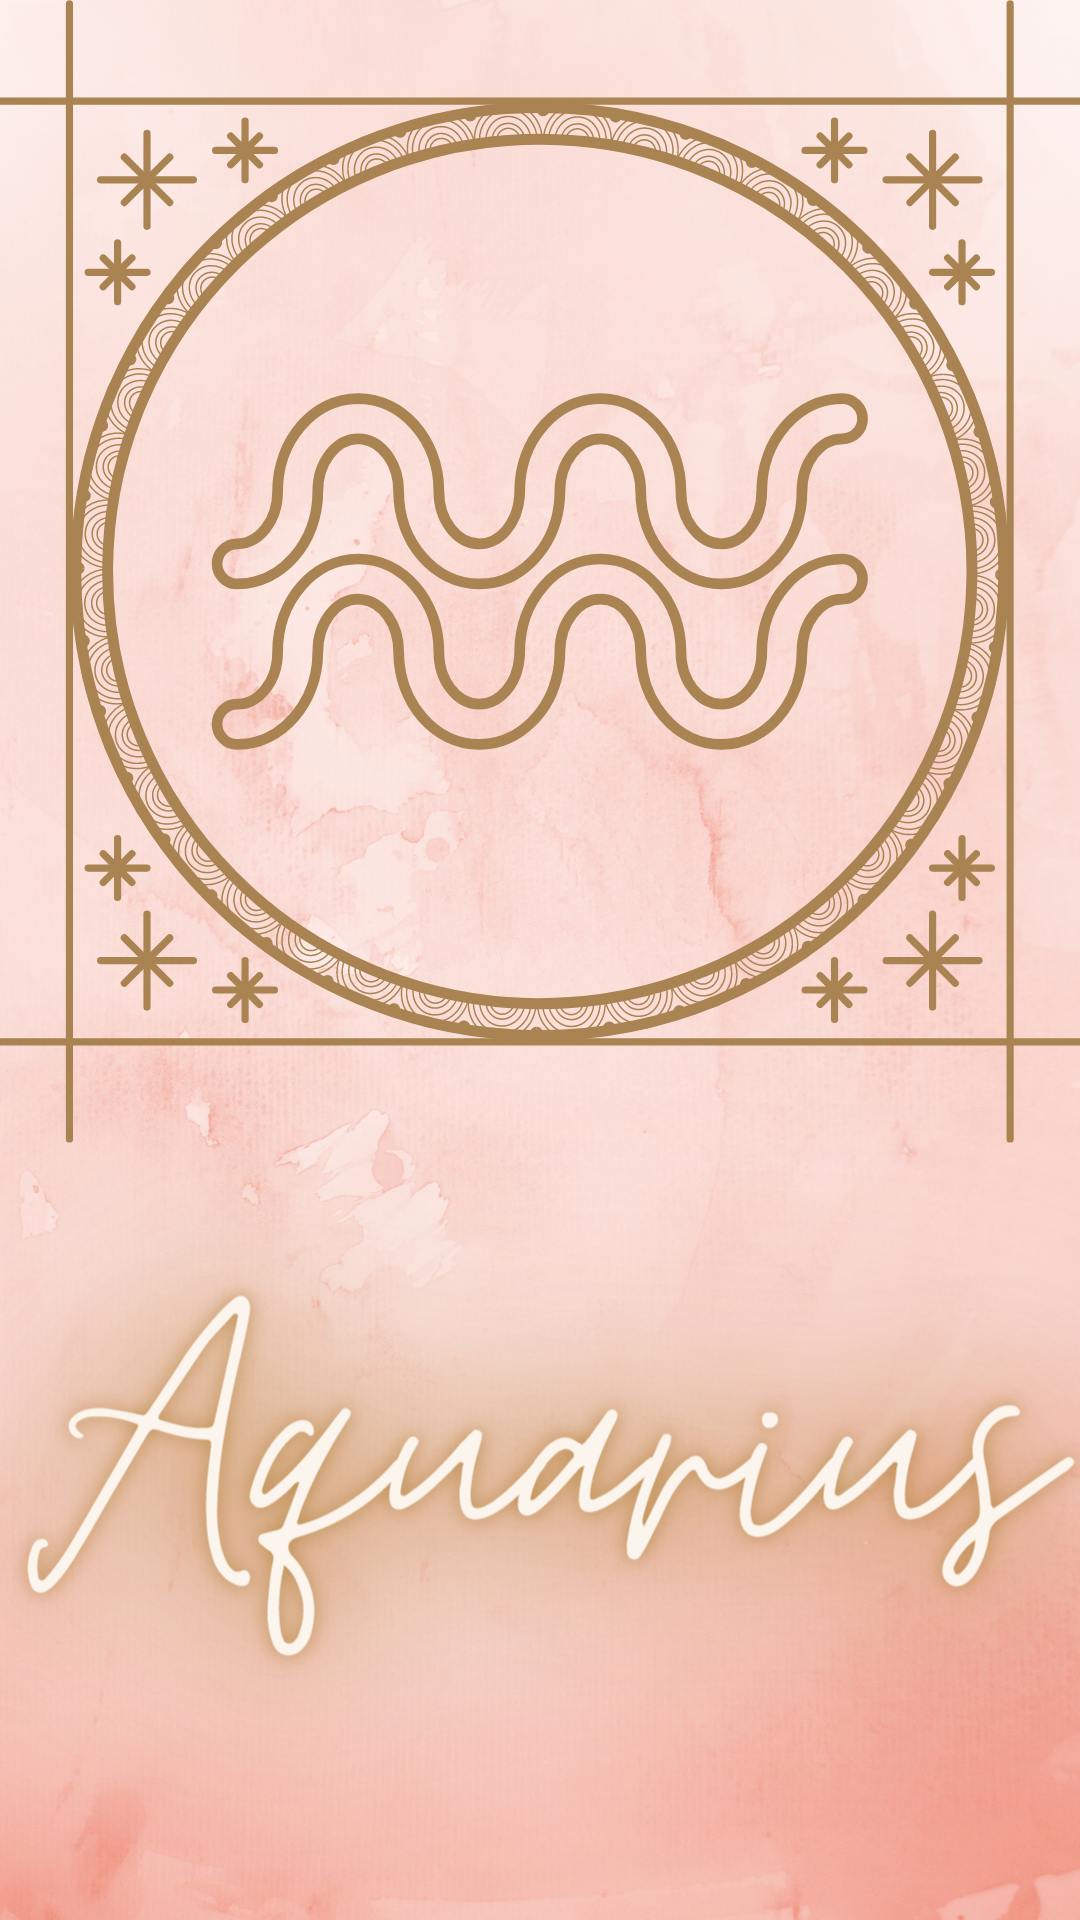 Aquarius Zodiac Phone Wallpaper/ Background. iPhone wallpaper, Aquarius aesthetic, Phone background wallpaper